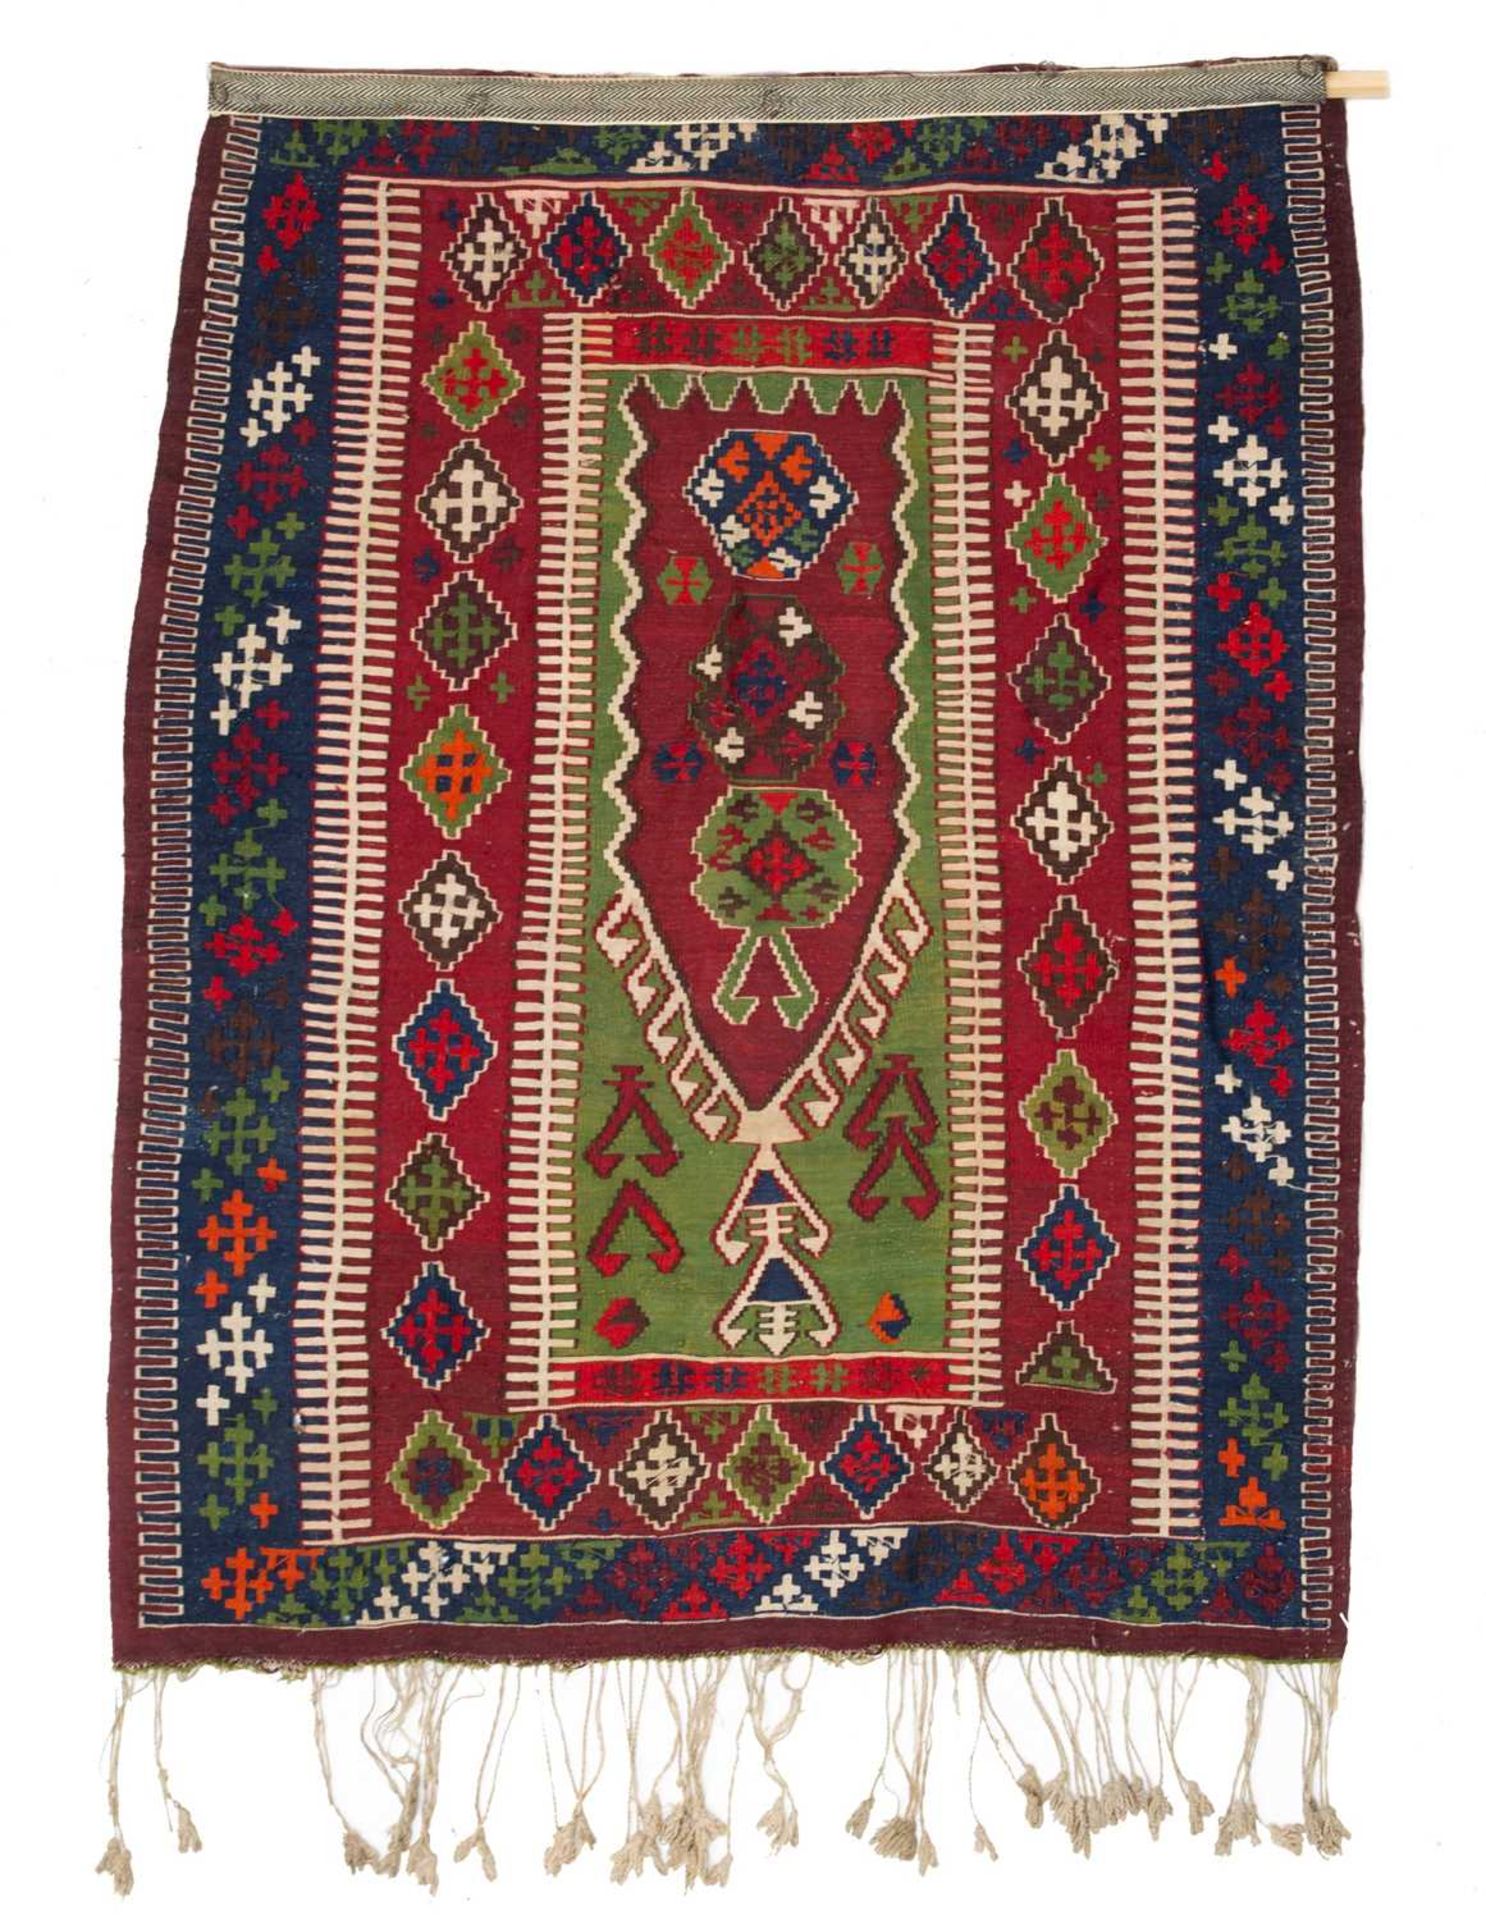 A late 19th/early 20th century Kelim polychrome rug